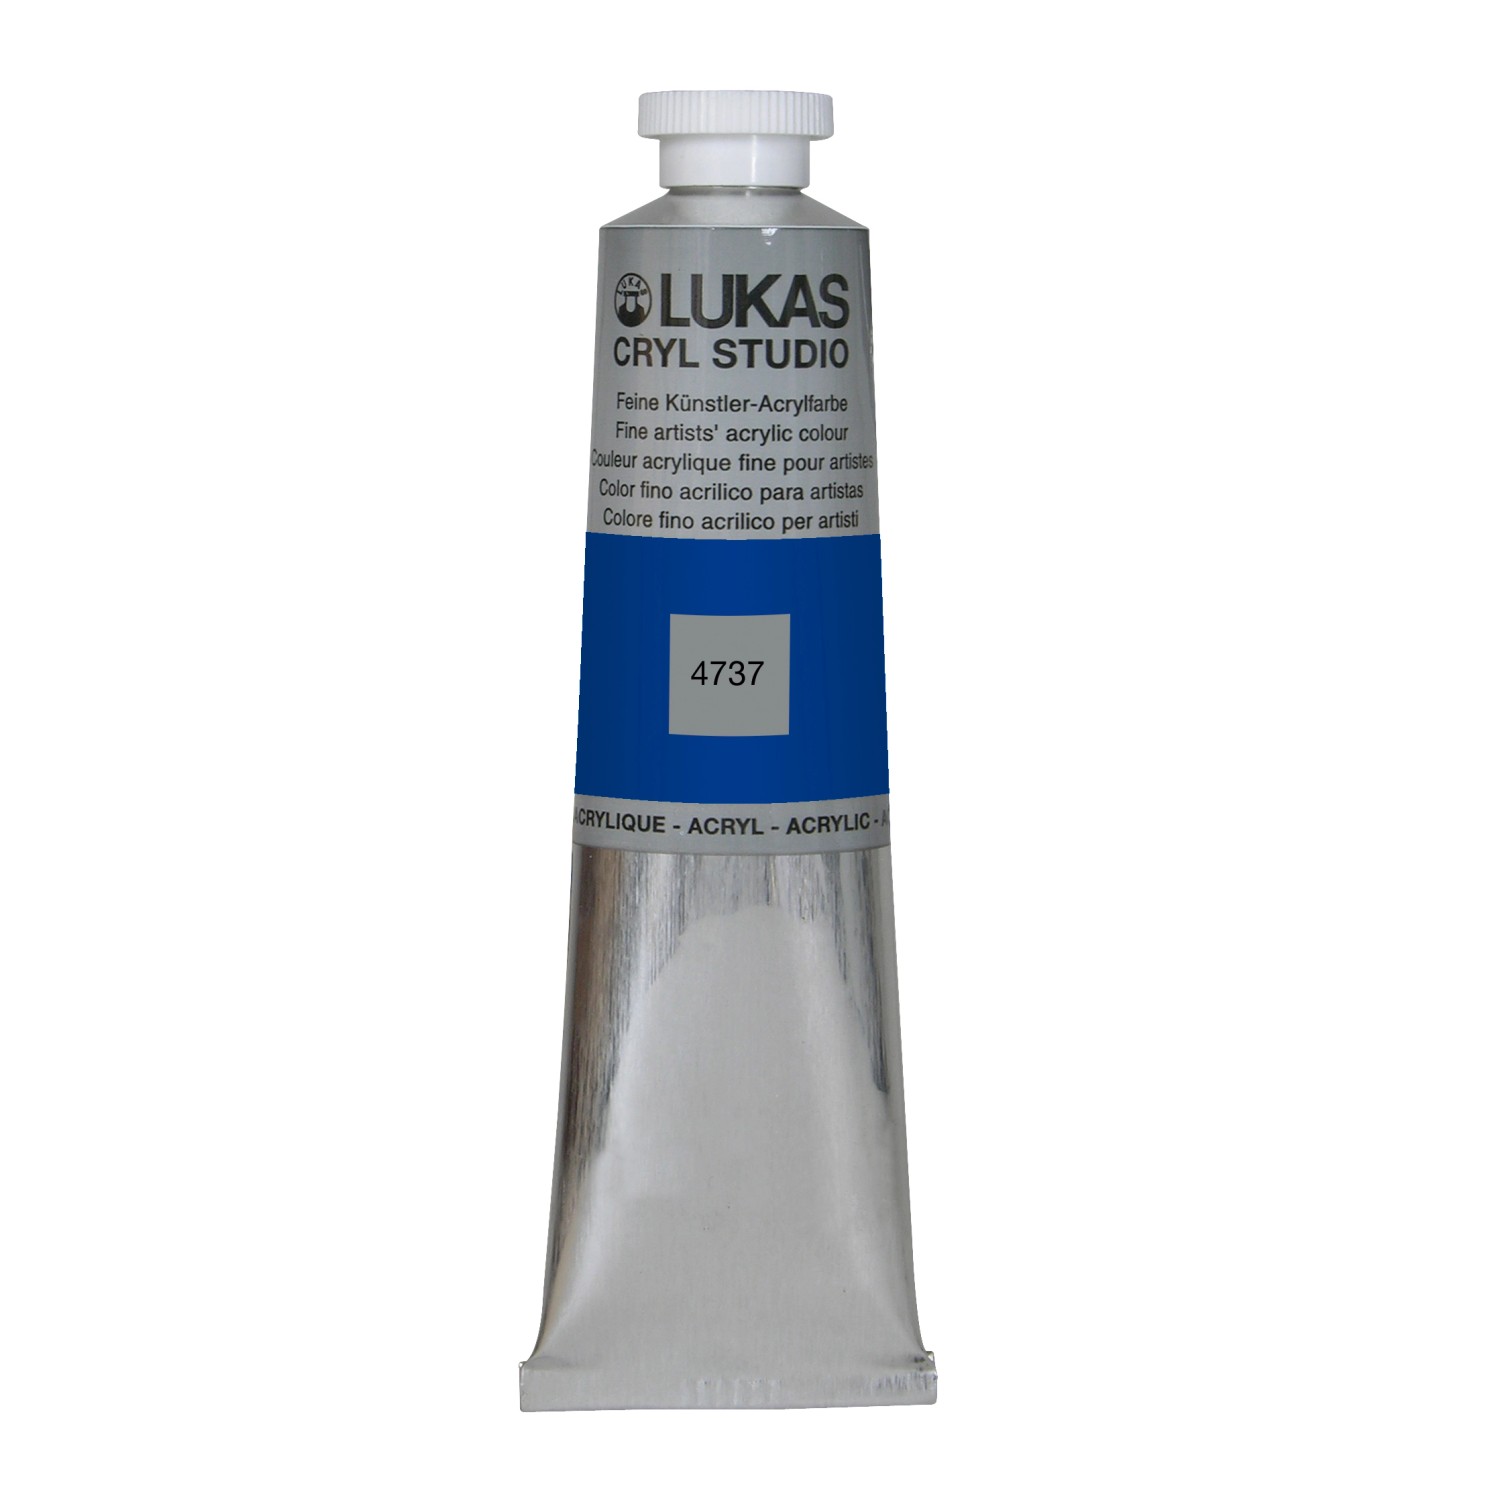 Lukas Cryl Studio Acrylfarbe Aluminiumtube Ultramarinblau 75ml von -